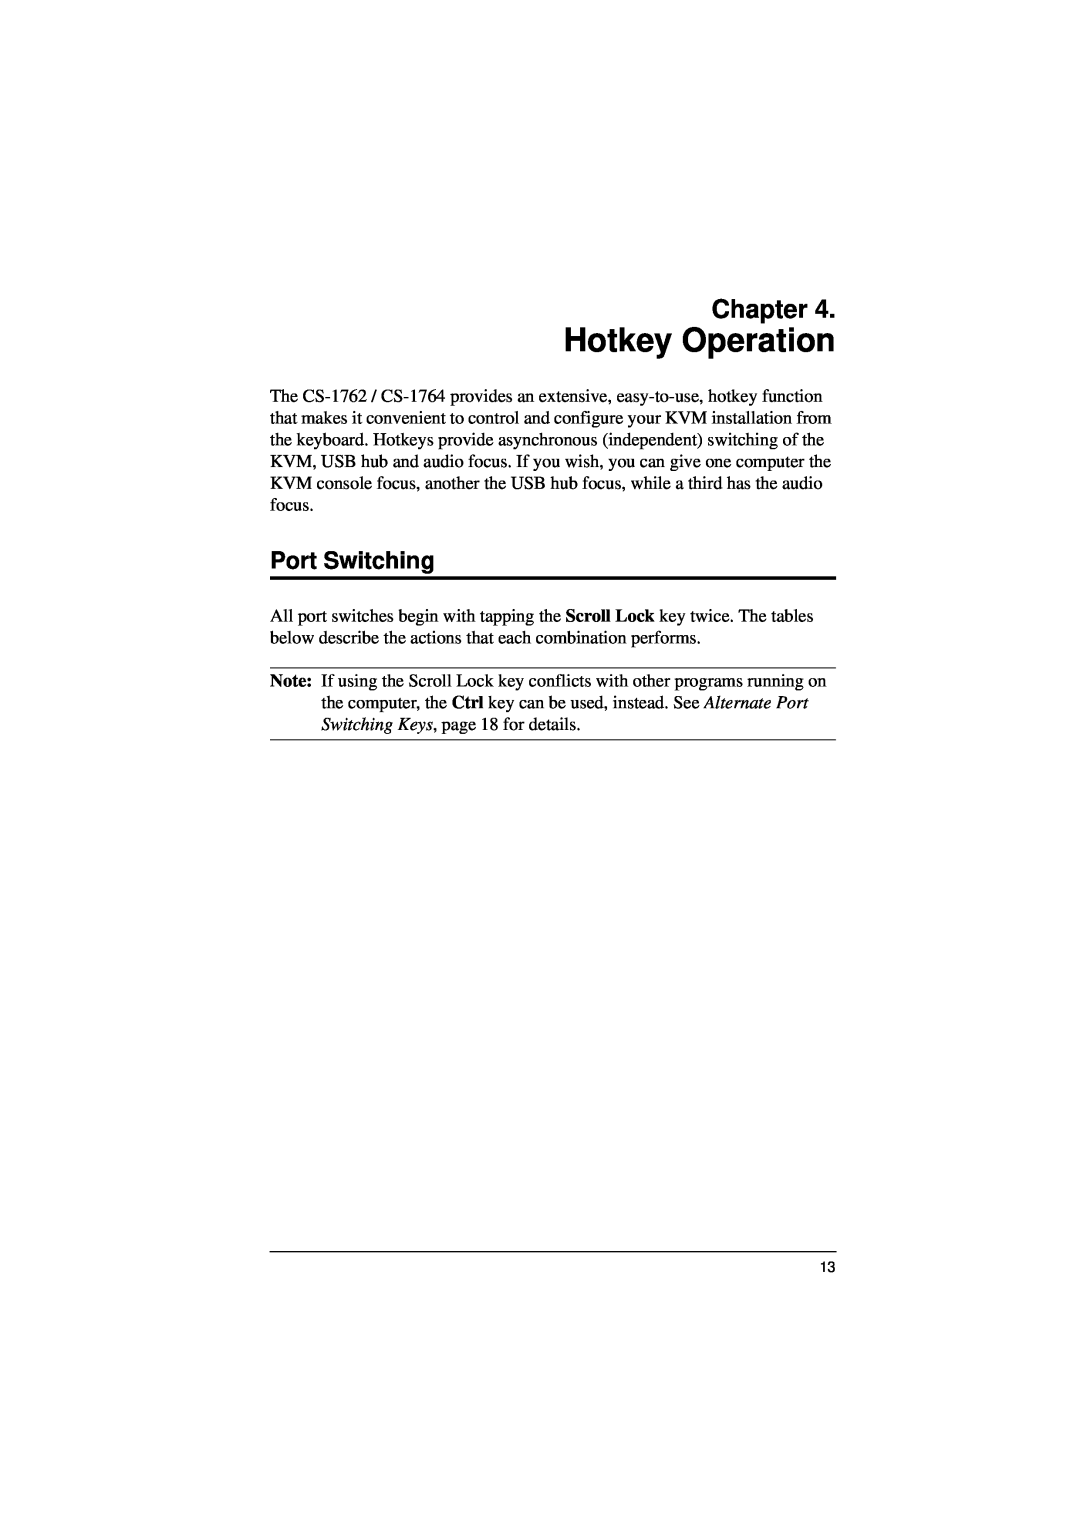 ATEN Technology CS-1762, CS-1764 user manual Hotkey Operation, Port Switching, Chapter 